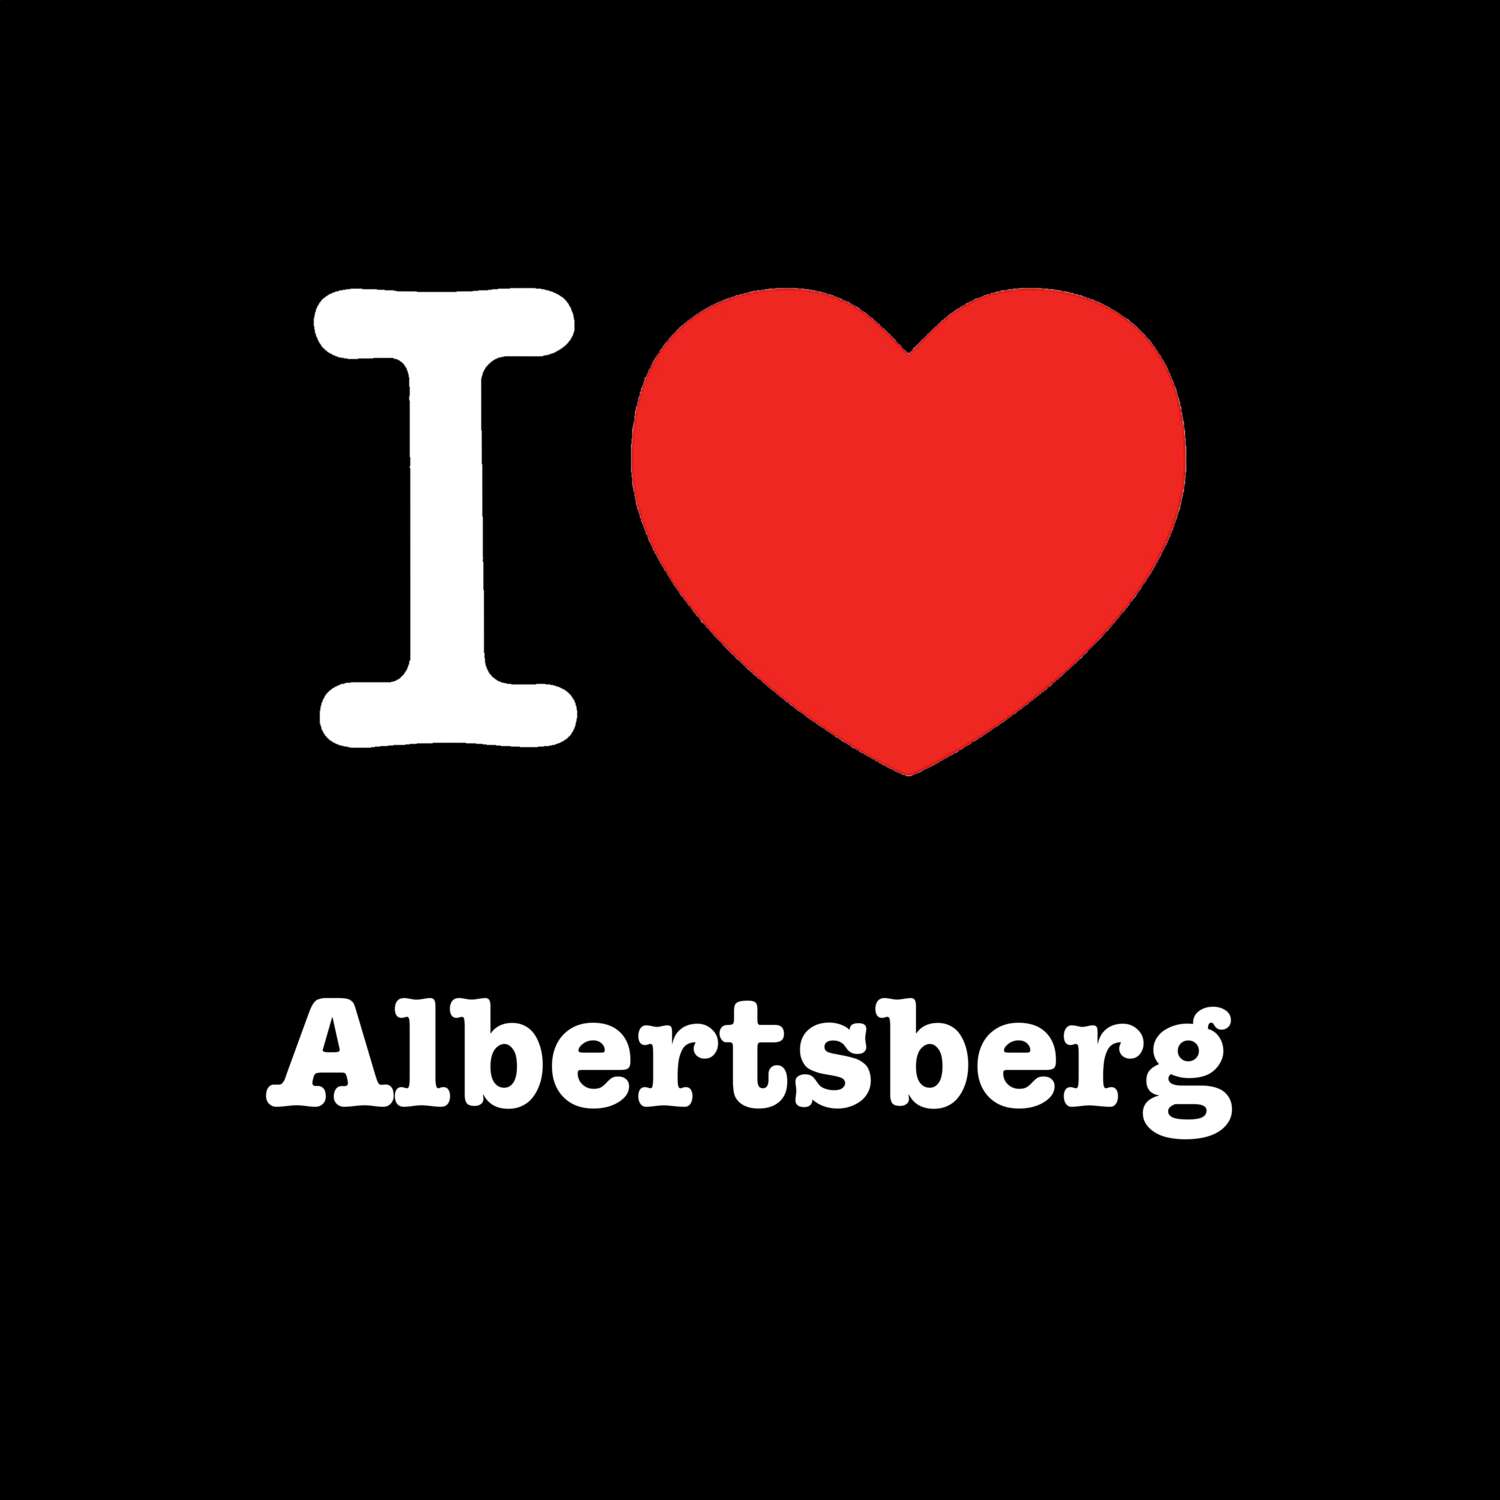 Albertsberg T-Shirt »I love«